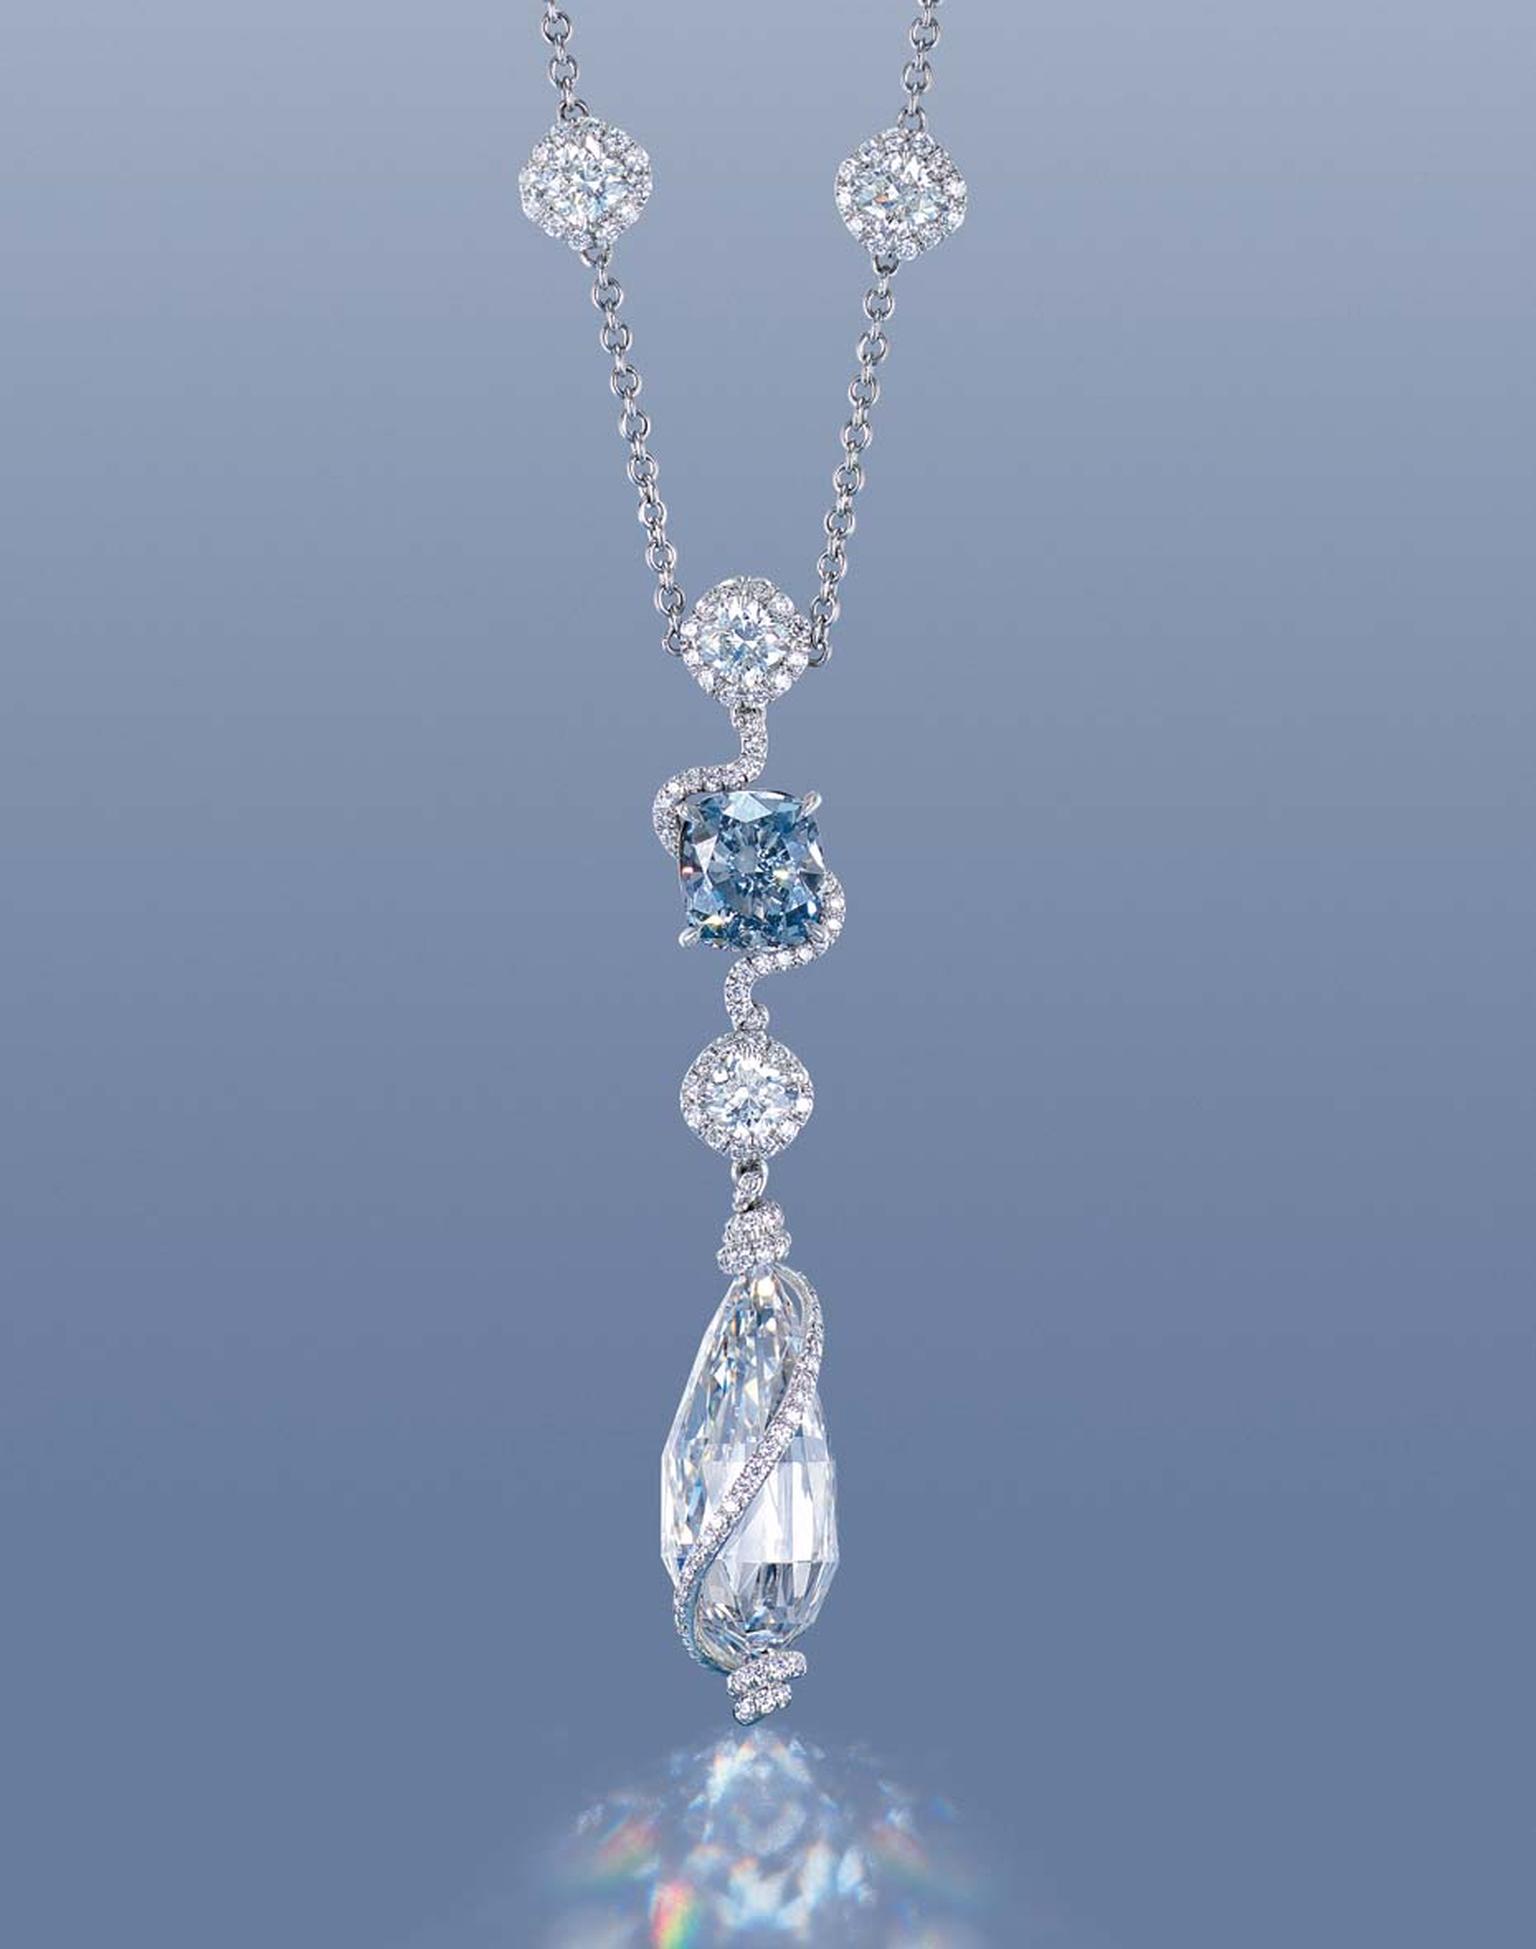 Internally flawless 12ct D colour briolette diamond pendent (estimate: US$1.6-2.3 million)